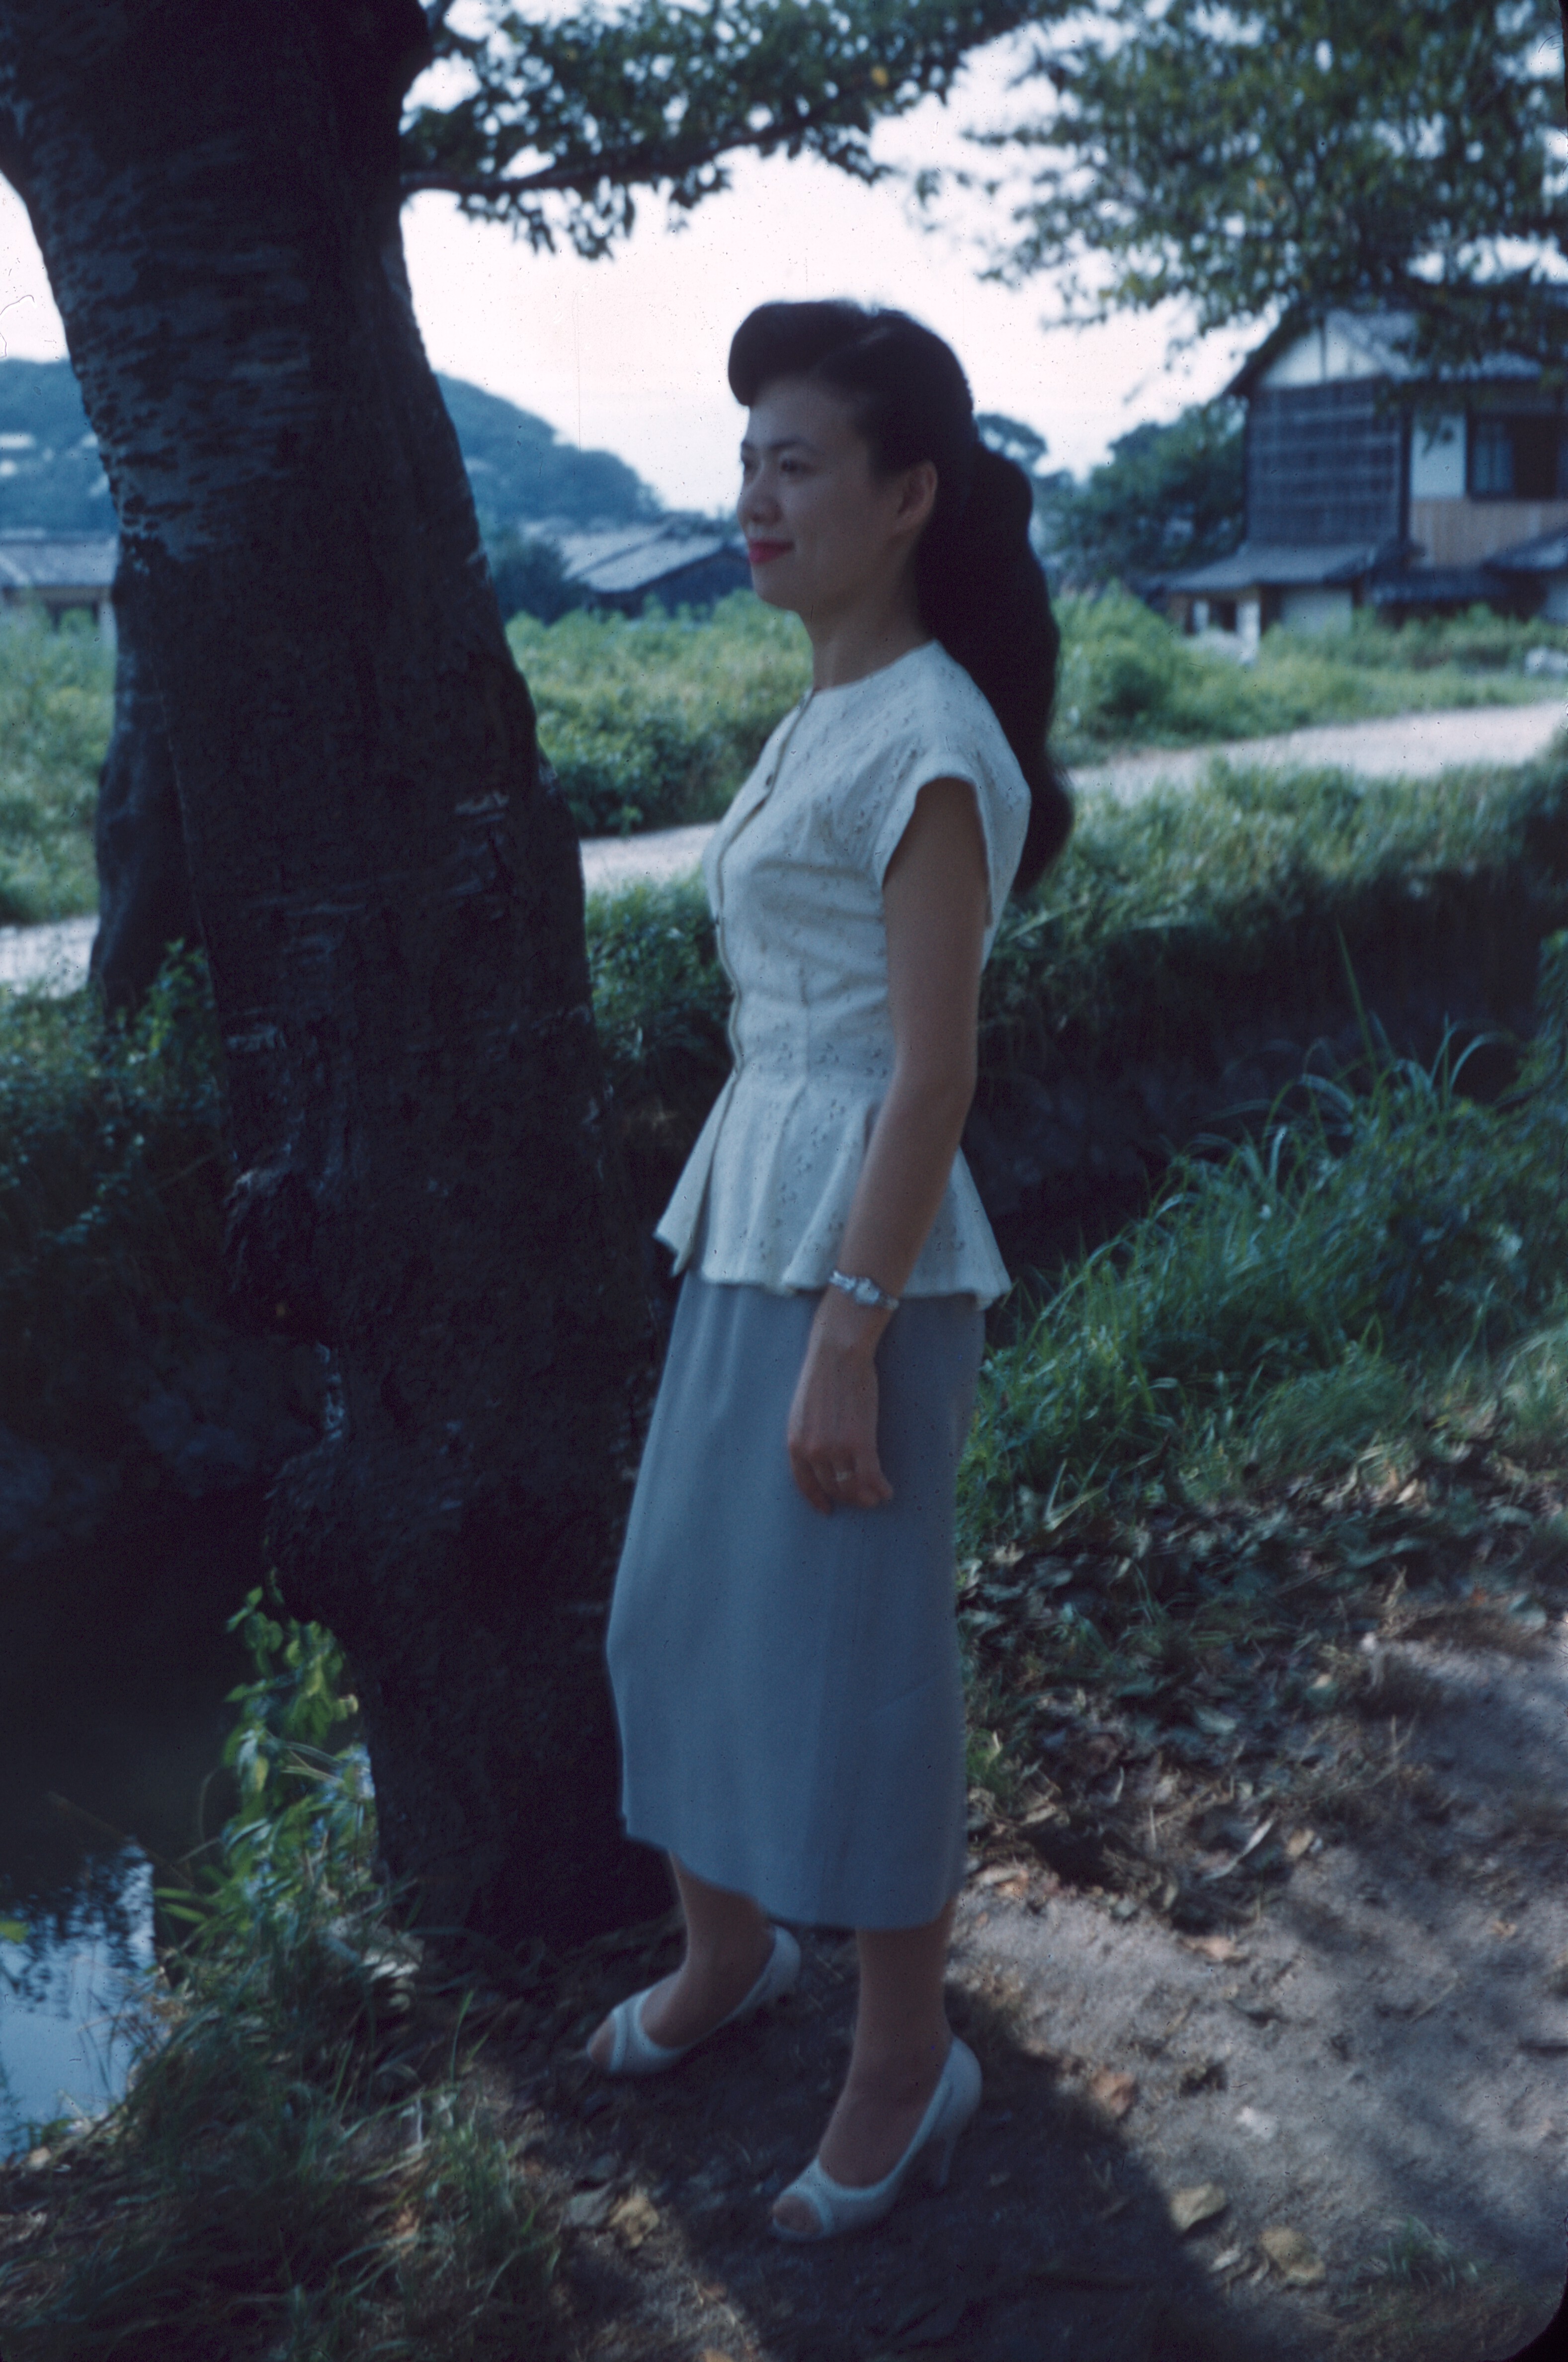 Kazuko, Daimonji Apt, Aug 1956